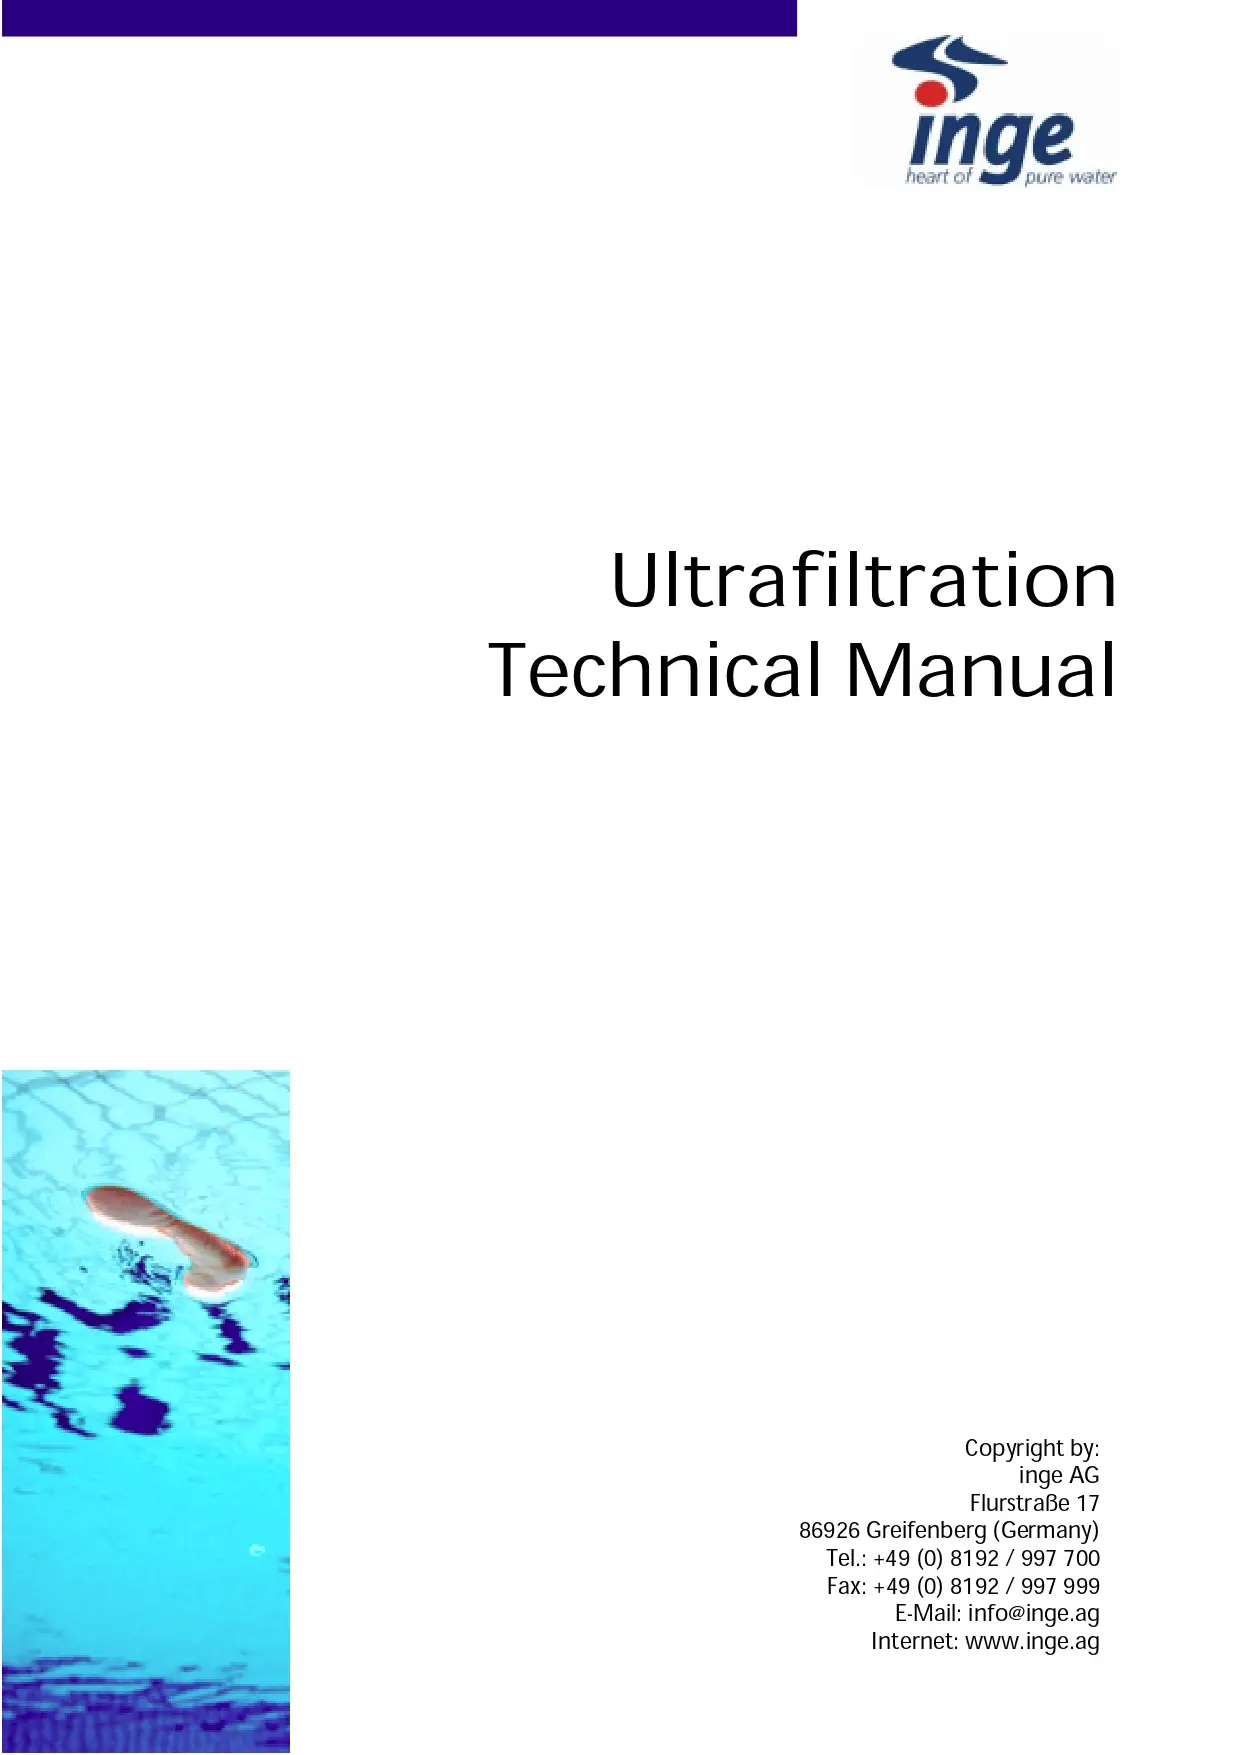 Ultrafiltration Technical Manual